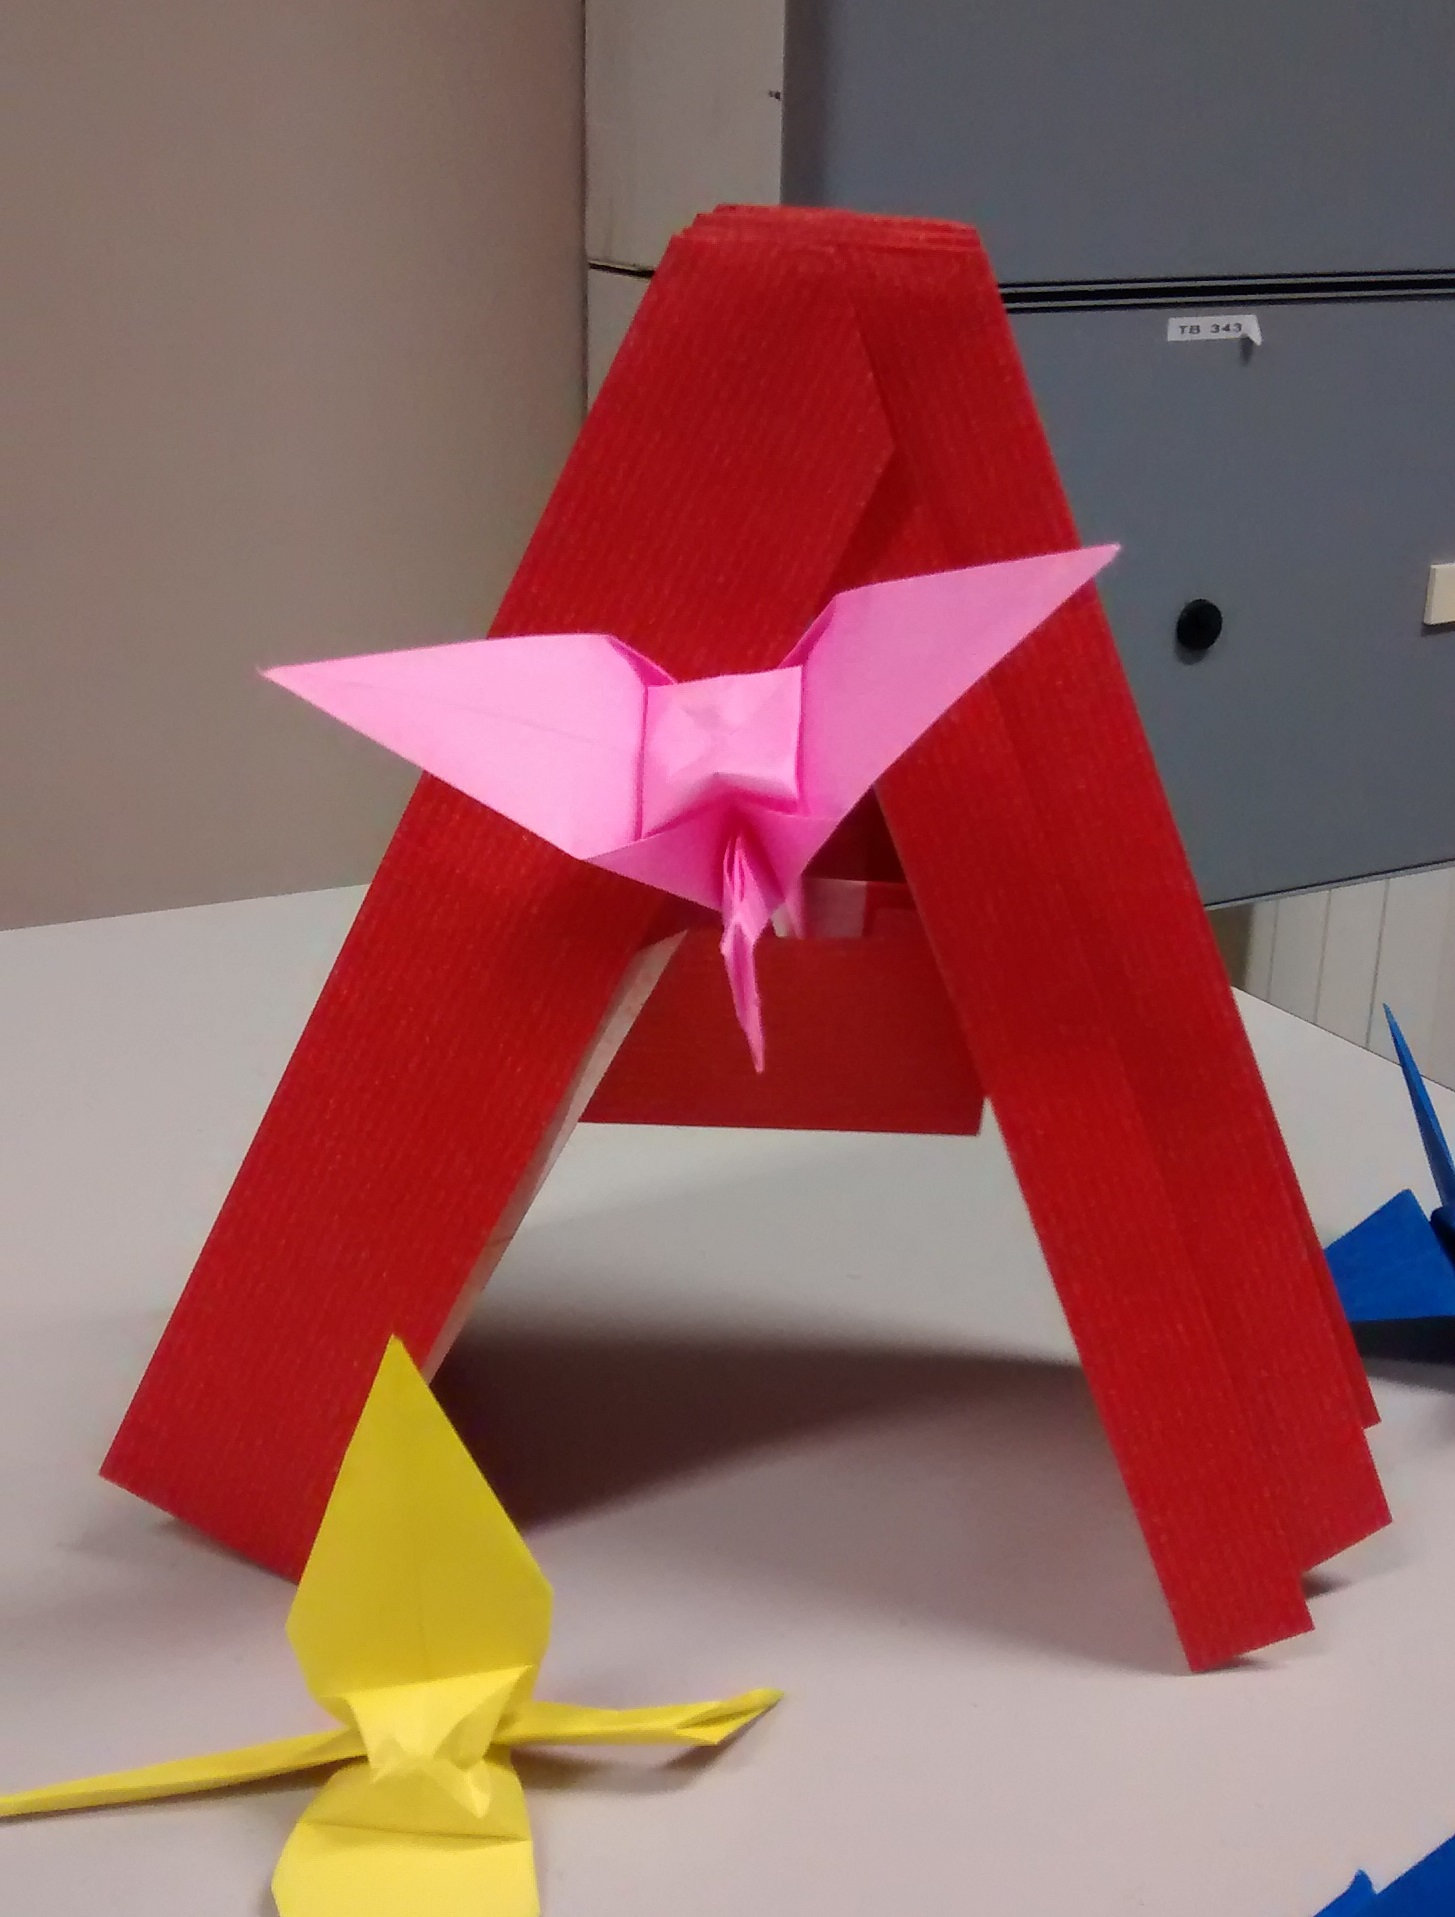 Vu en séance origami 2m7t